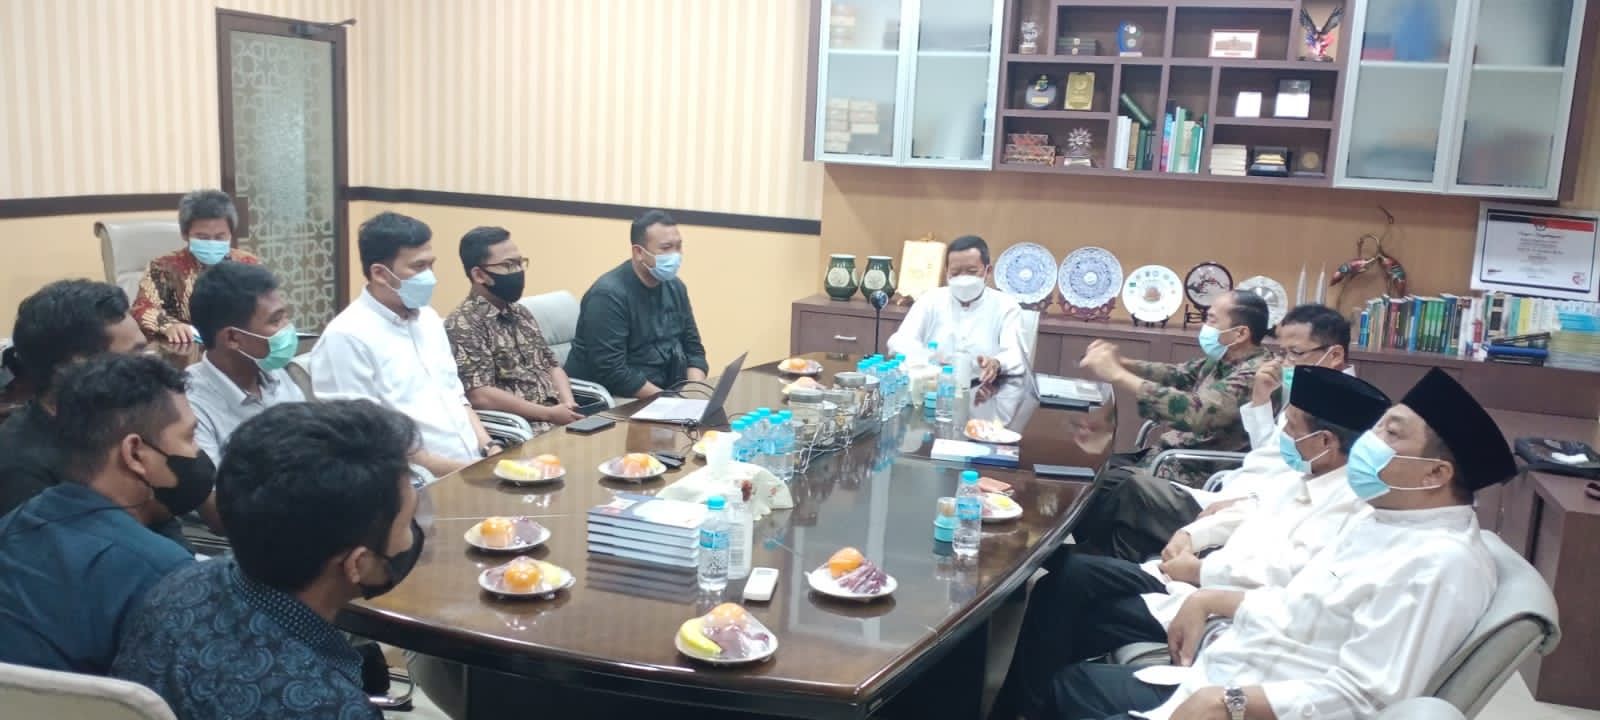 Sowan ke PW Muhammadiyah, IMM Jatim Dapat Nasihat Penting